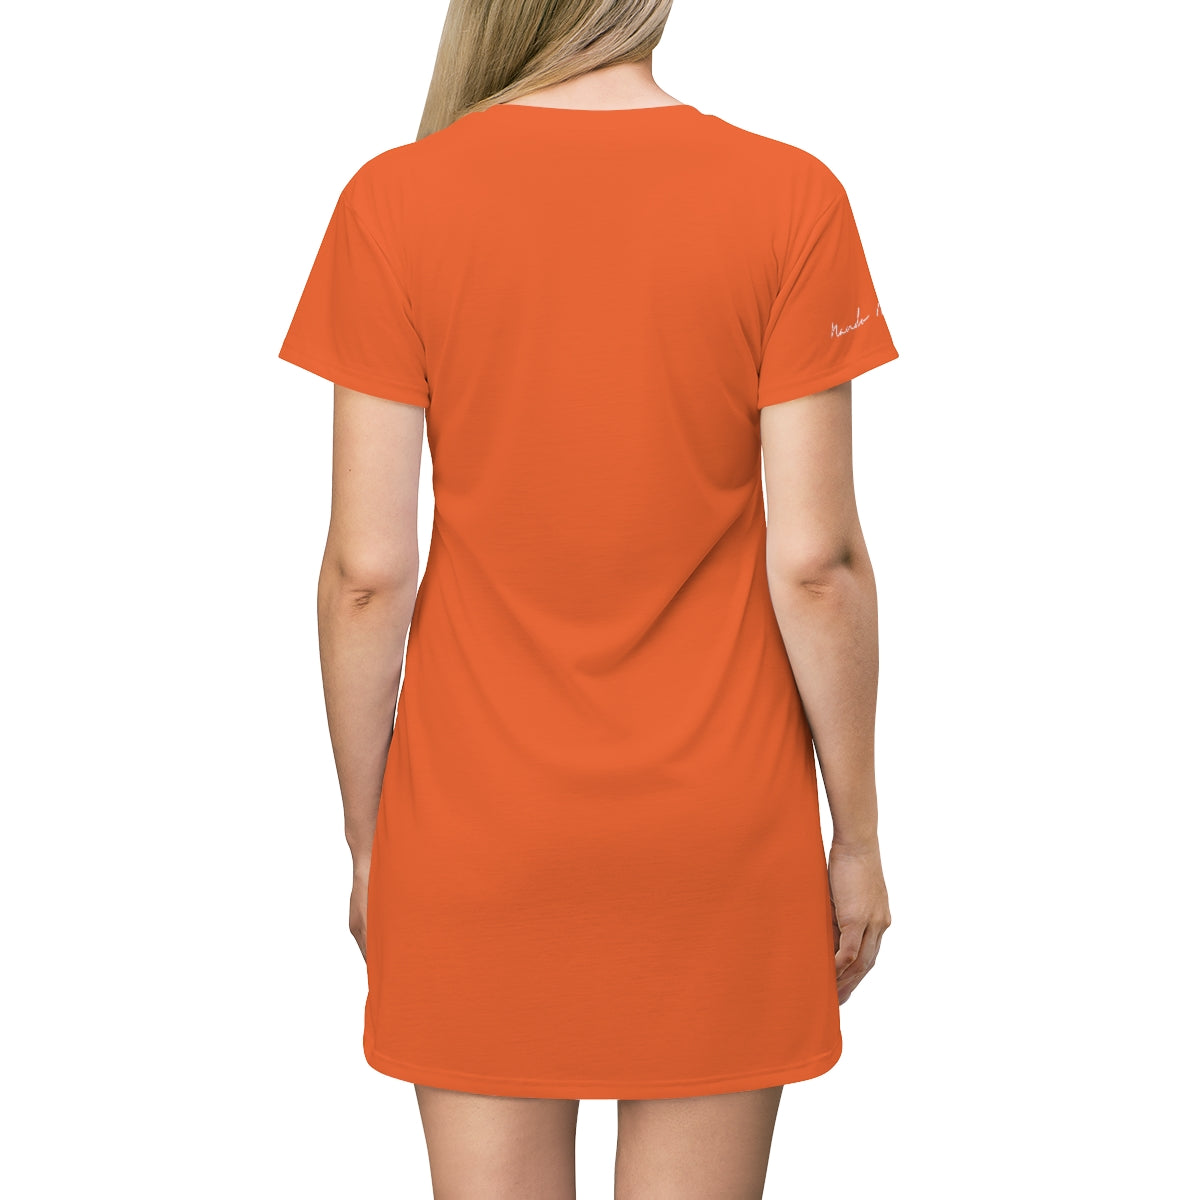 Shirtdress, Orange-Turquoise NYC View